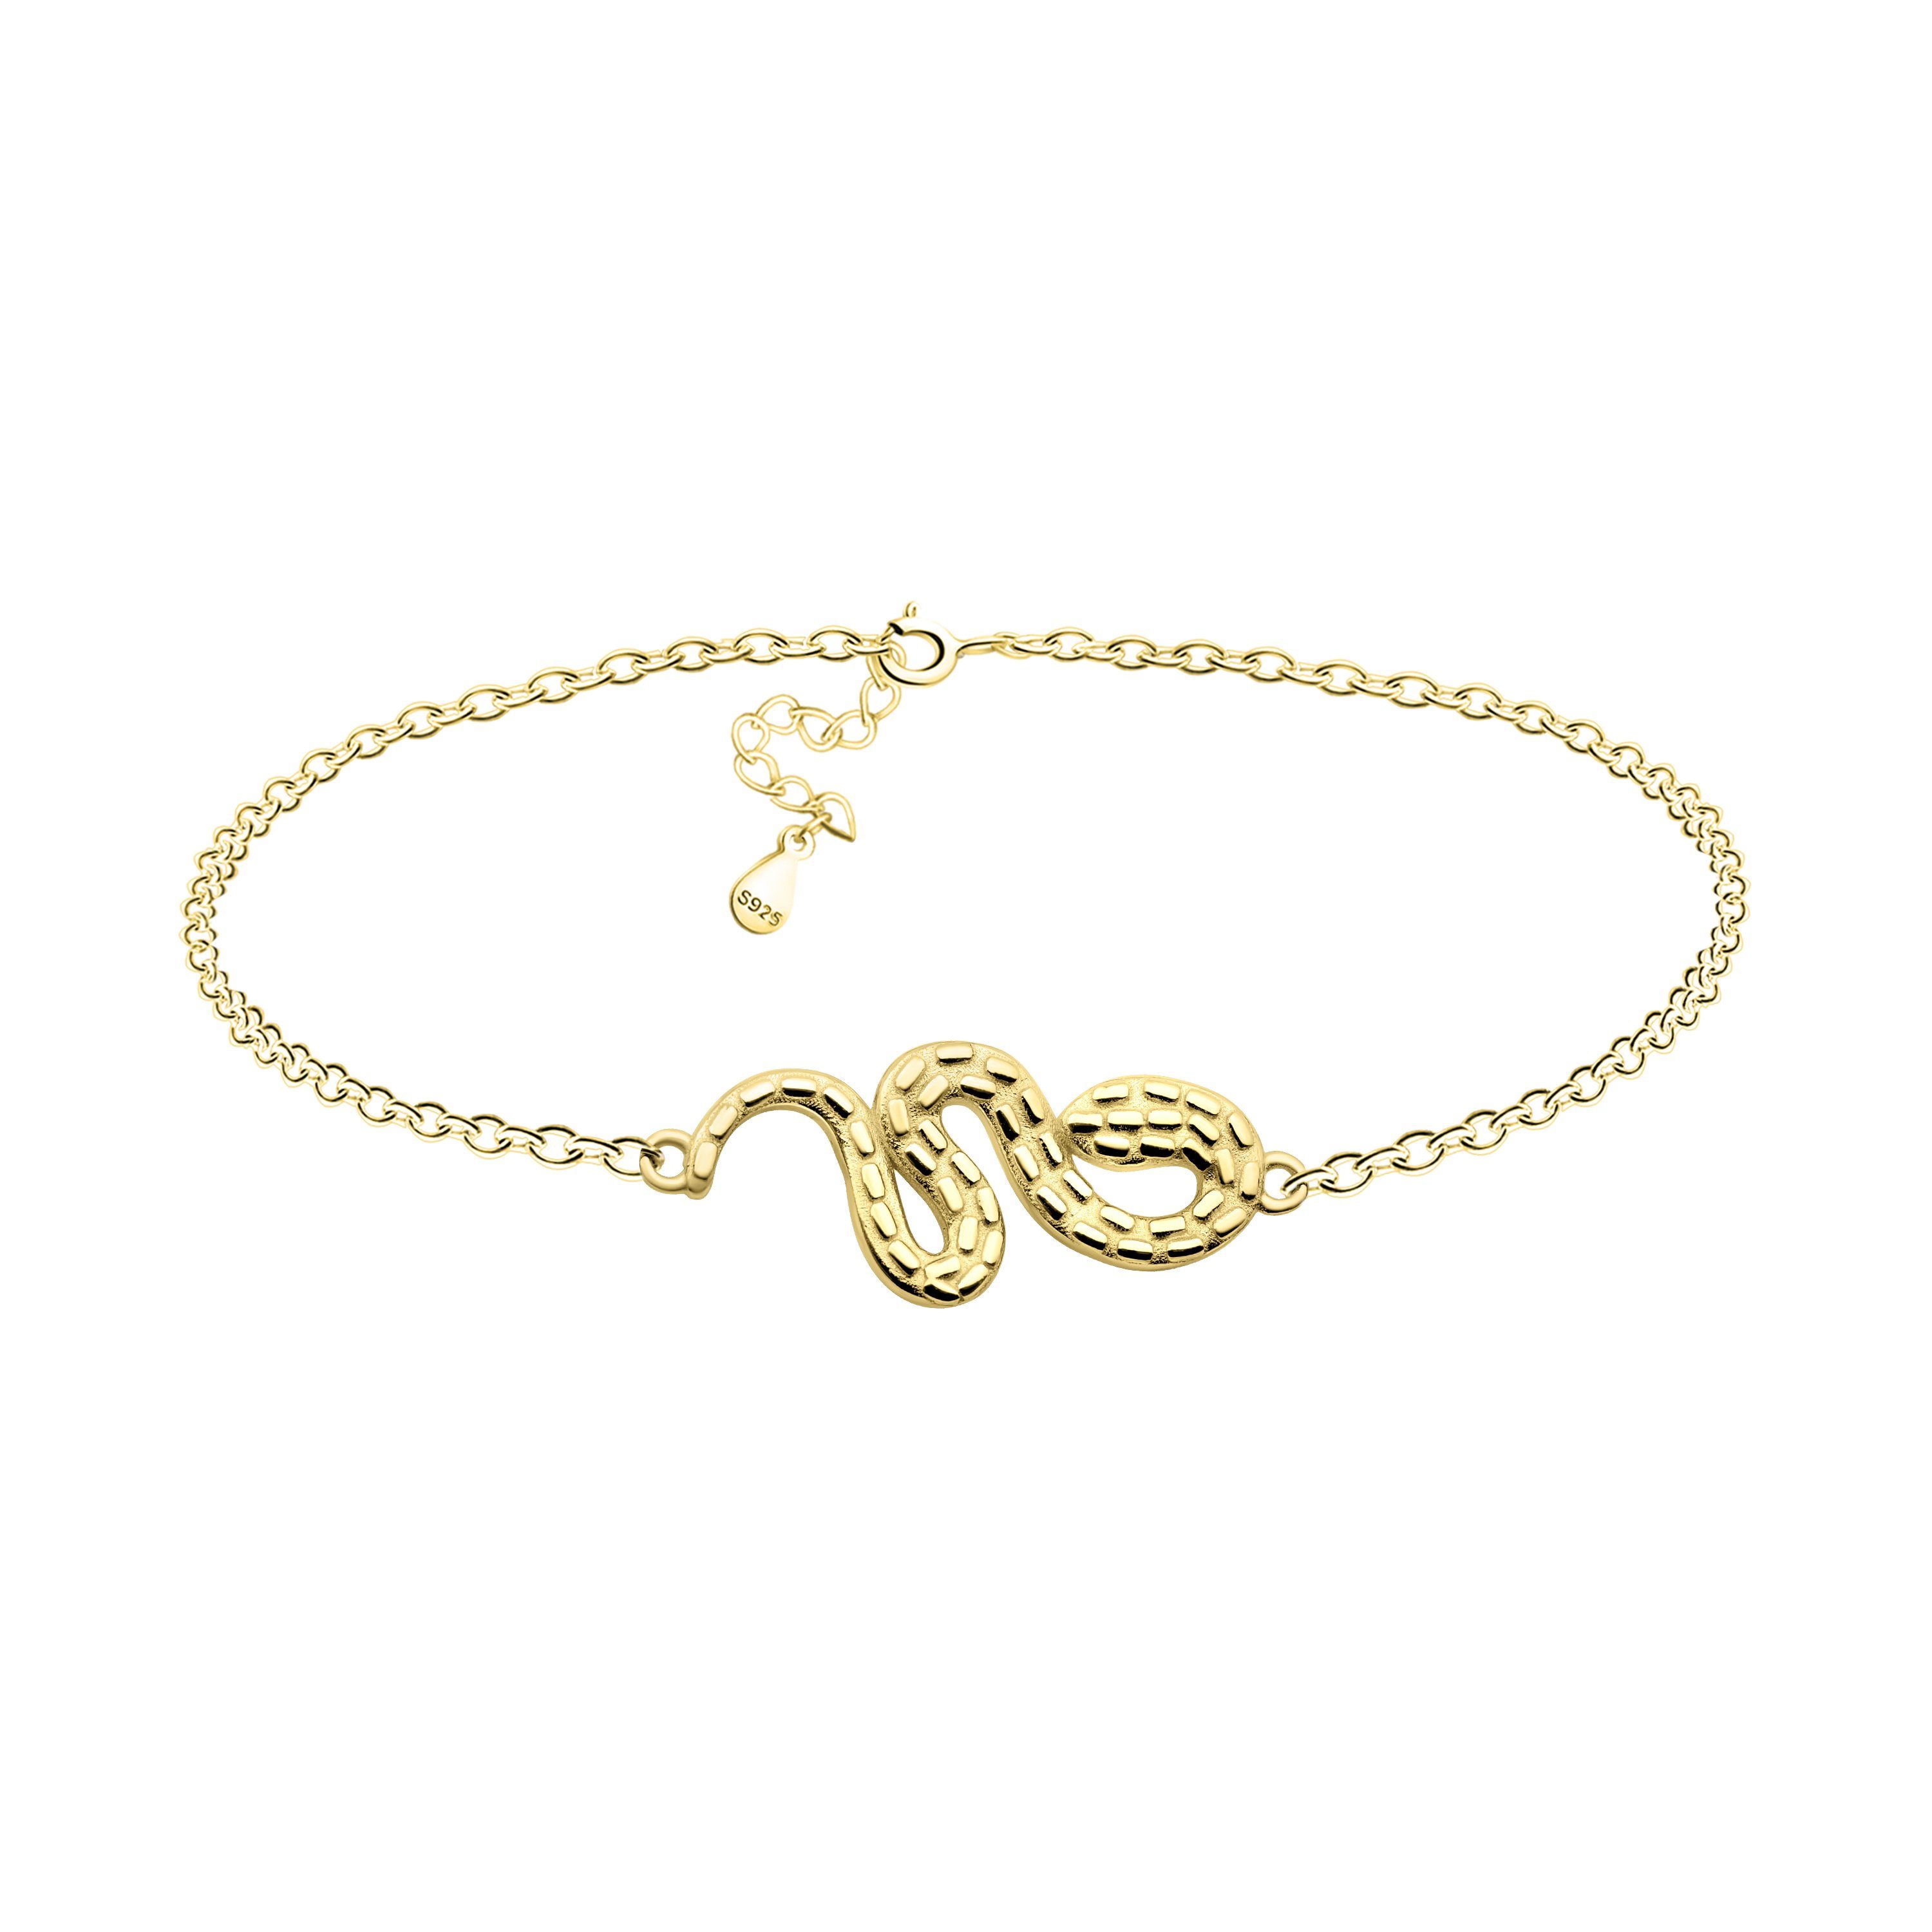 Sofia Milani Armband Schlange (Armband), 925 Silber Damen Schmuck gold | Silberarmbänder